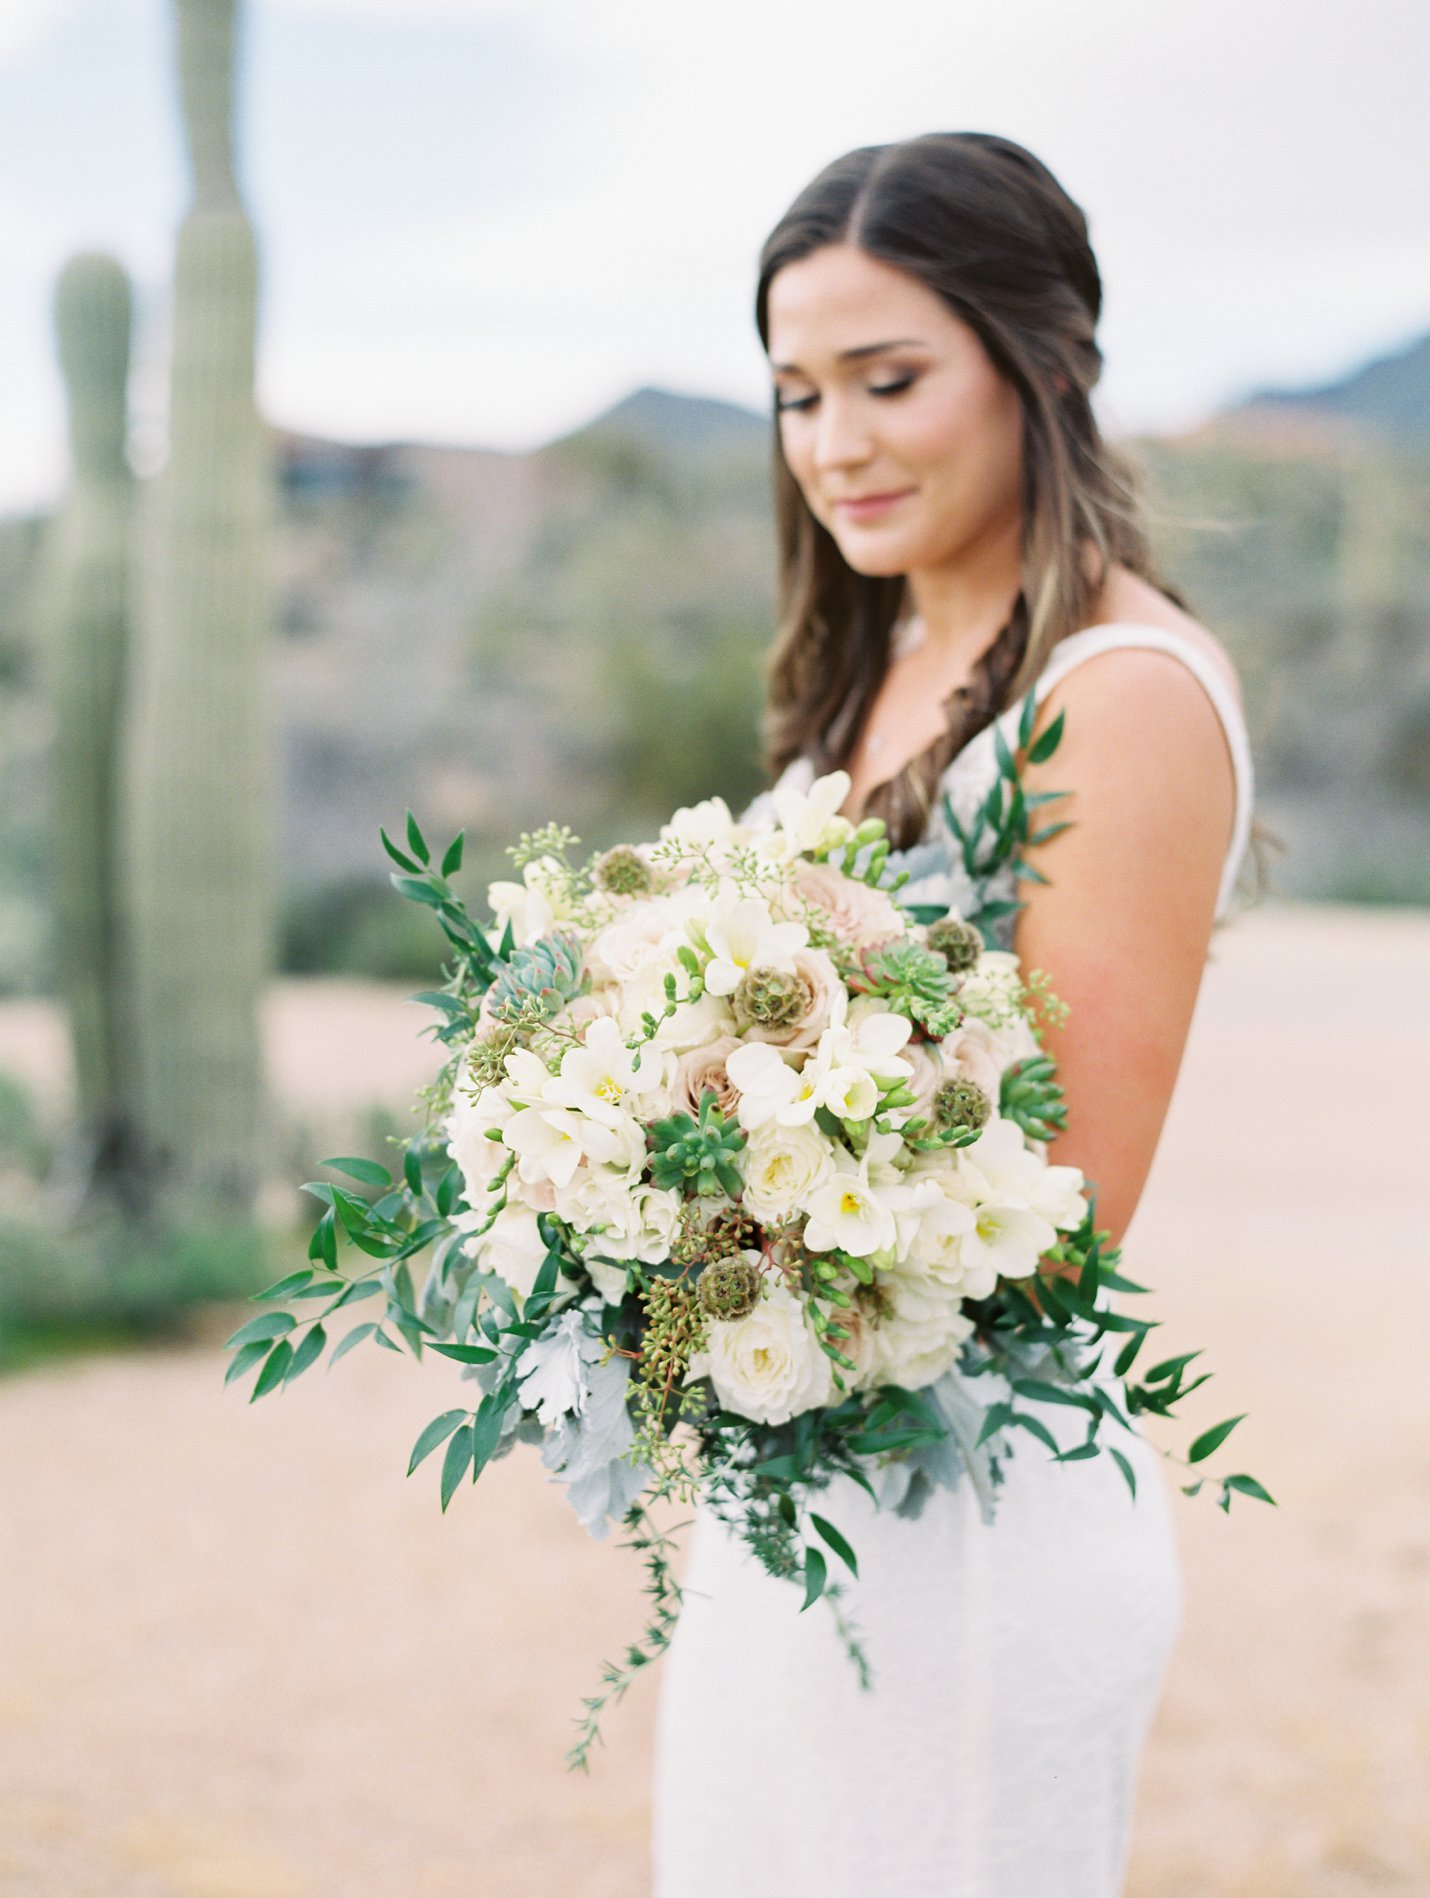 Desert Mountain wedding - Rachel Solomon Photography